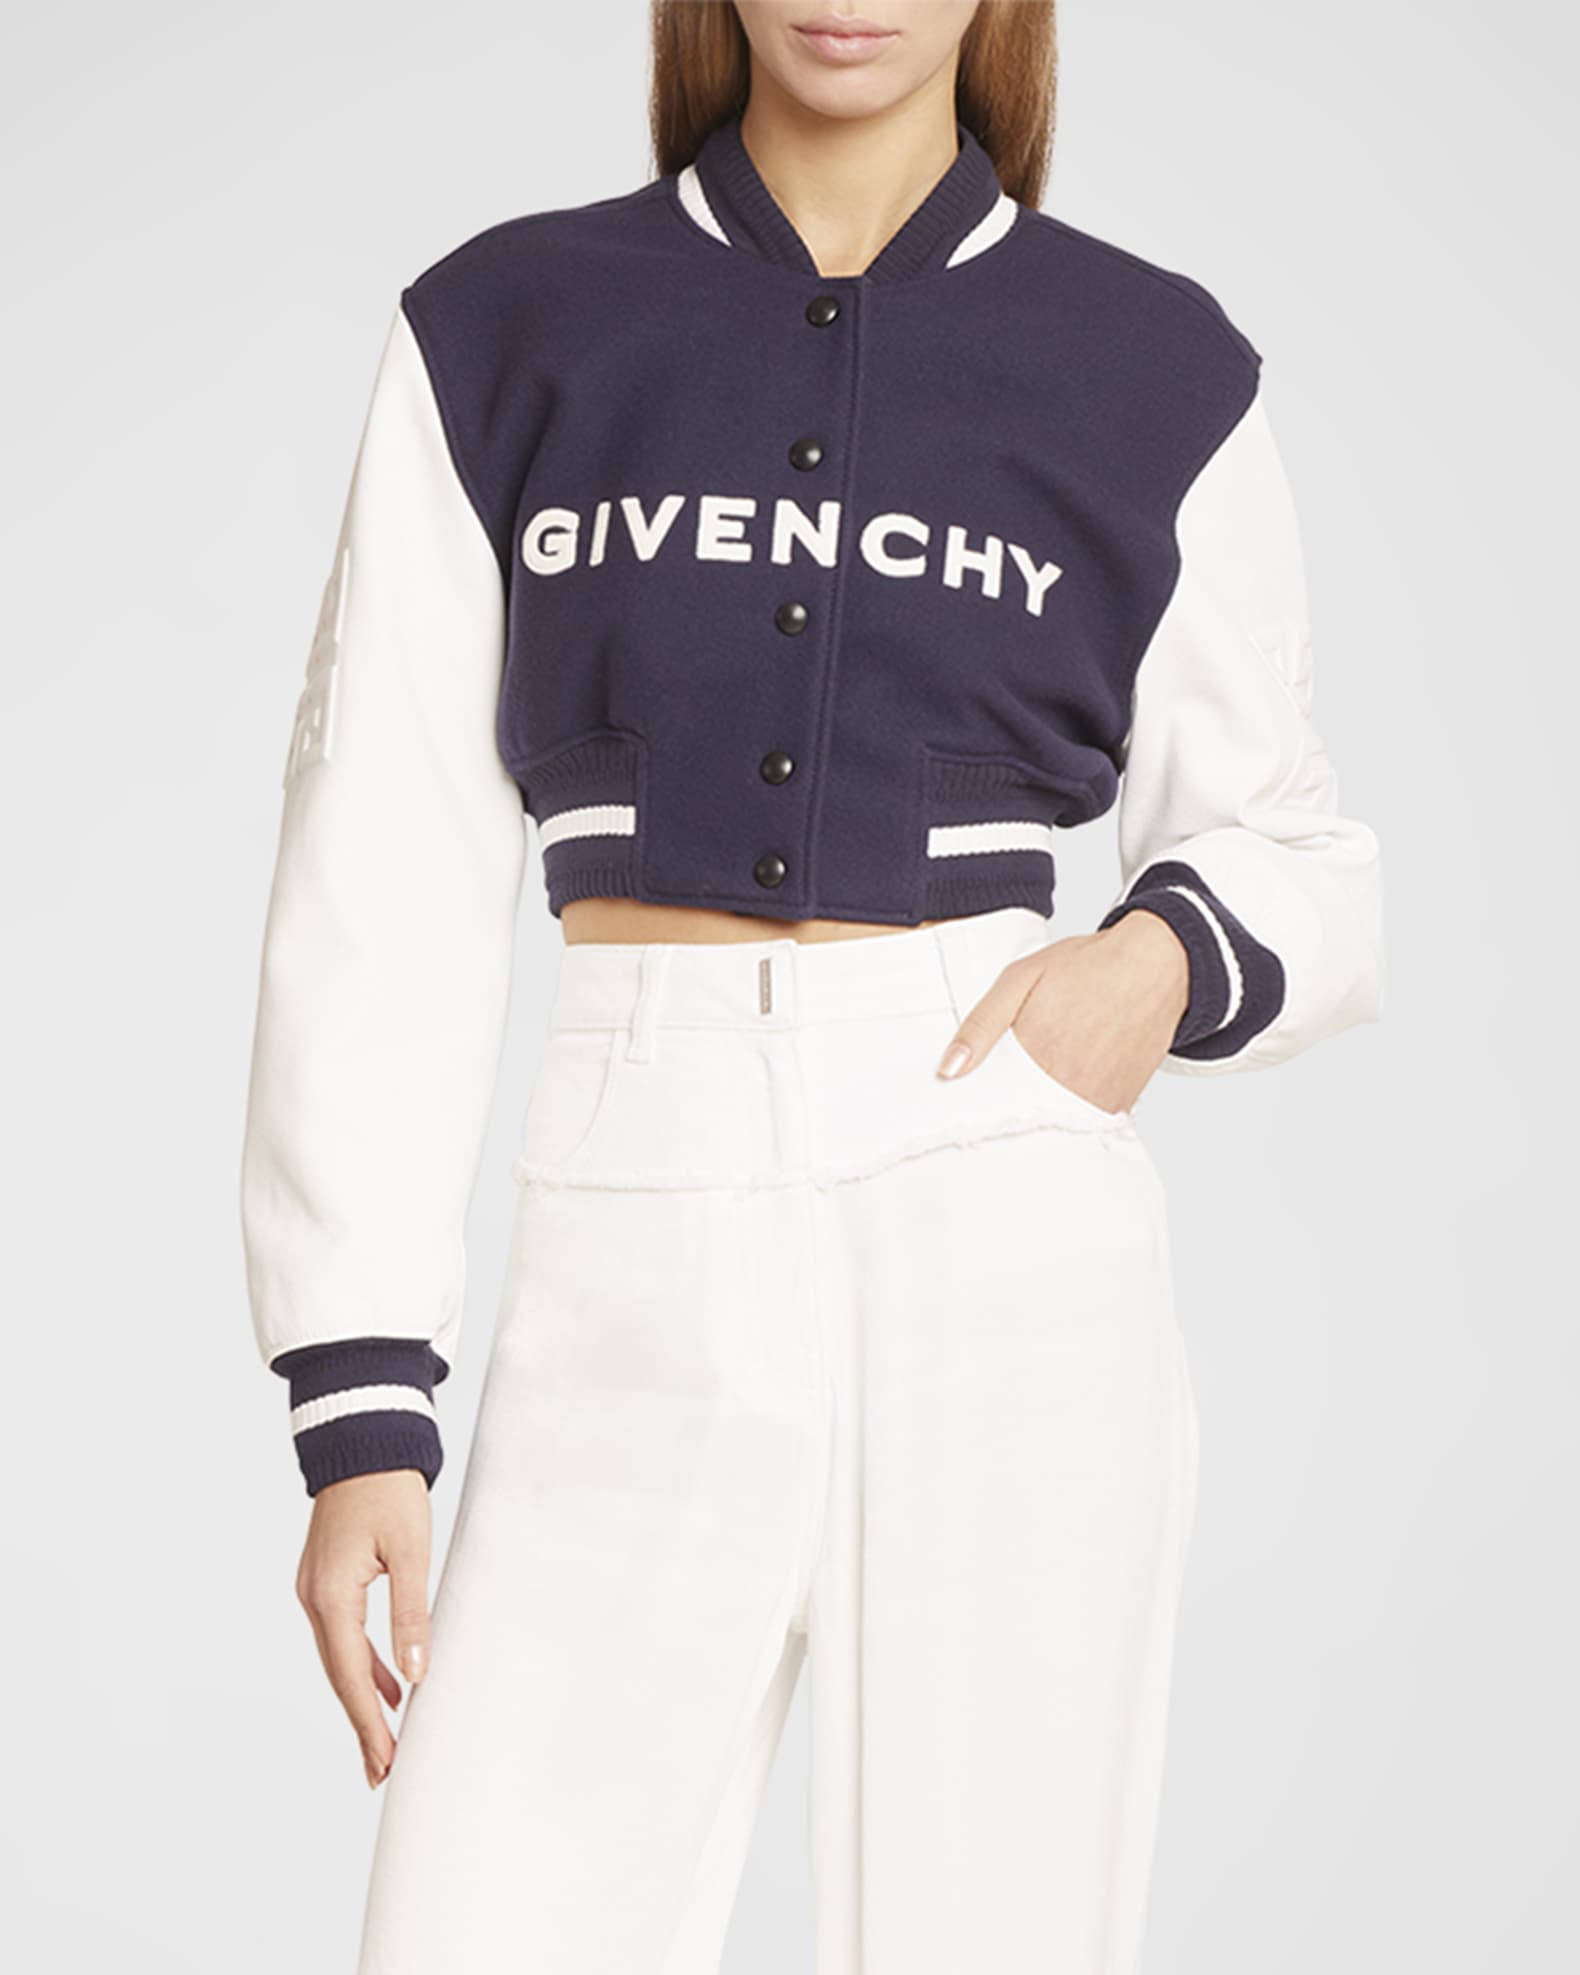 Givenchy Kids logo-embroidered bomber jacket - Black